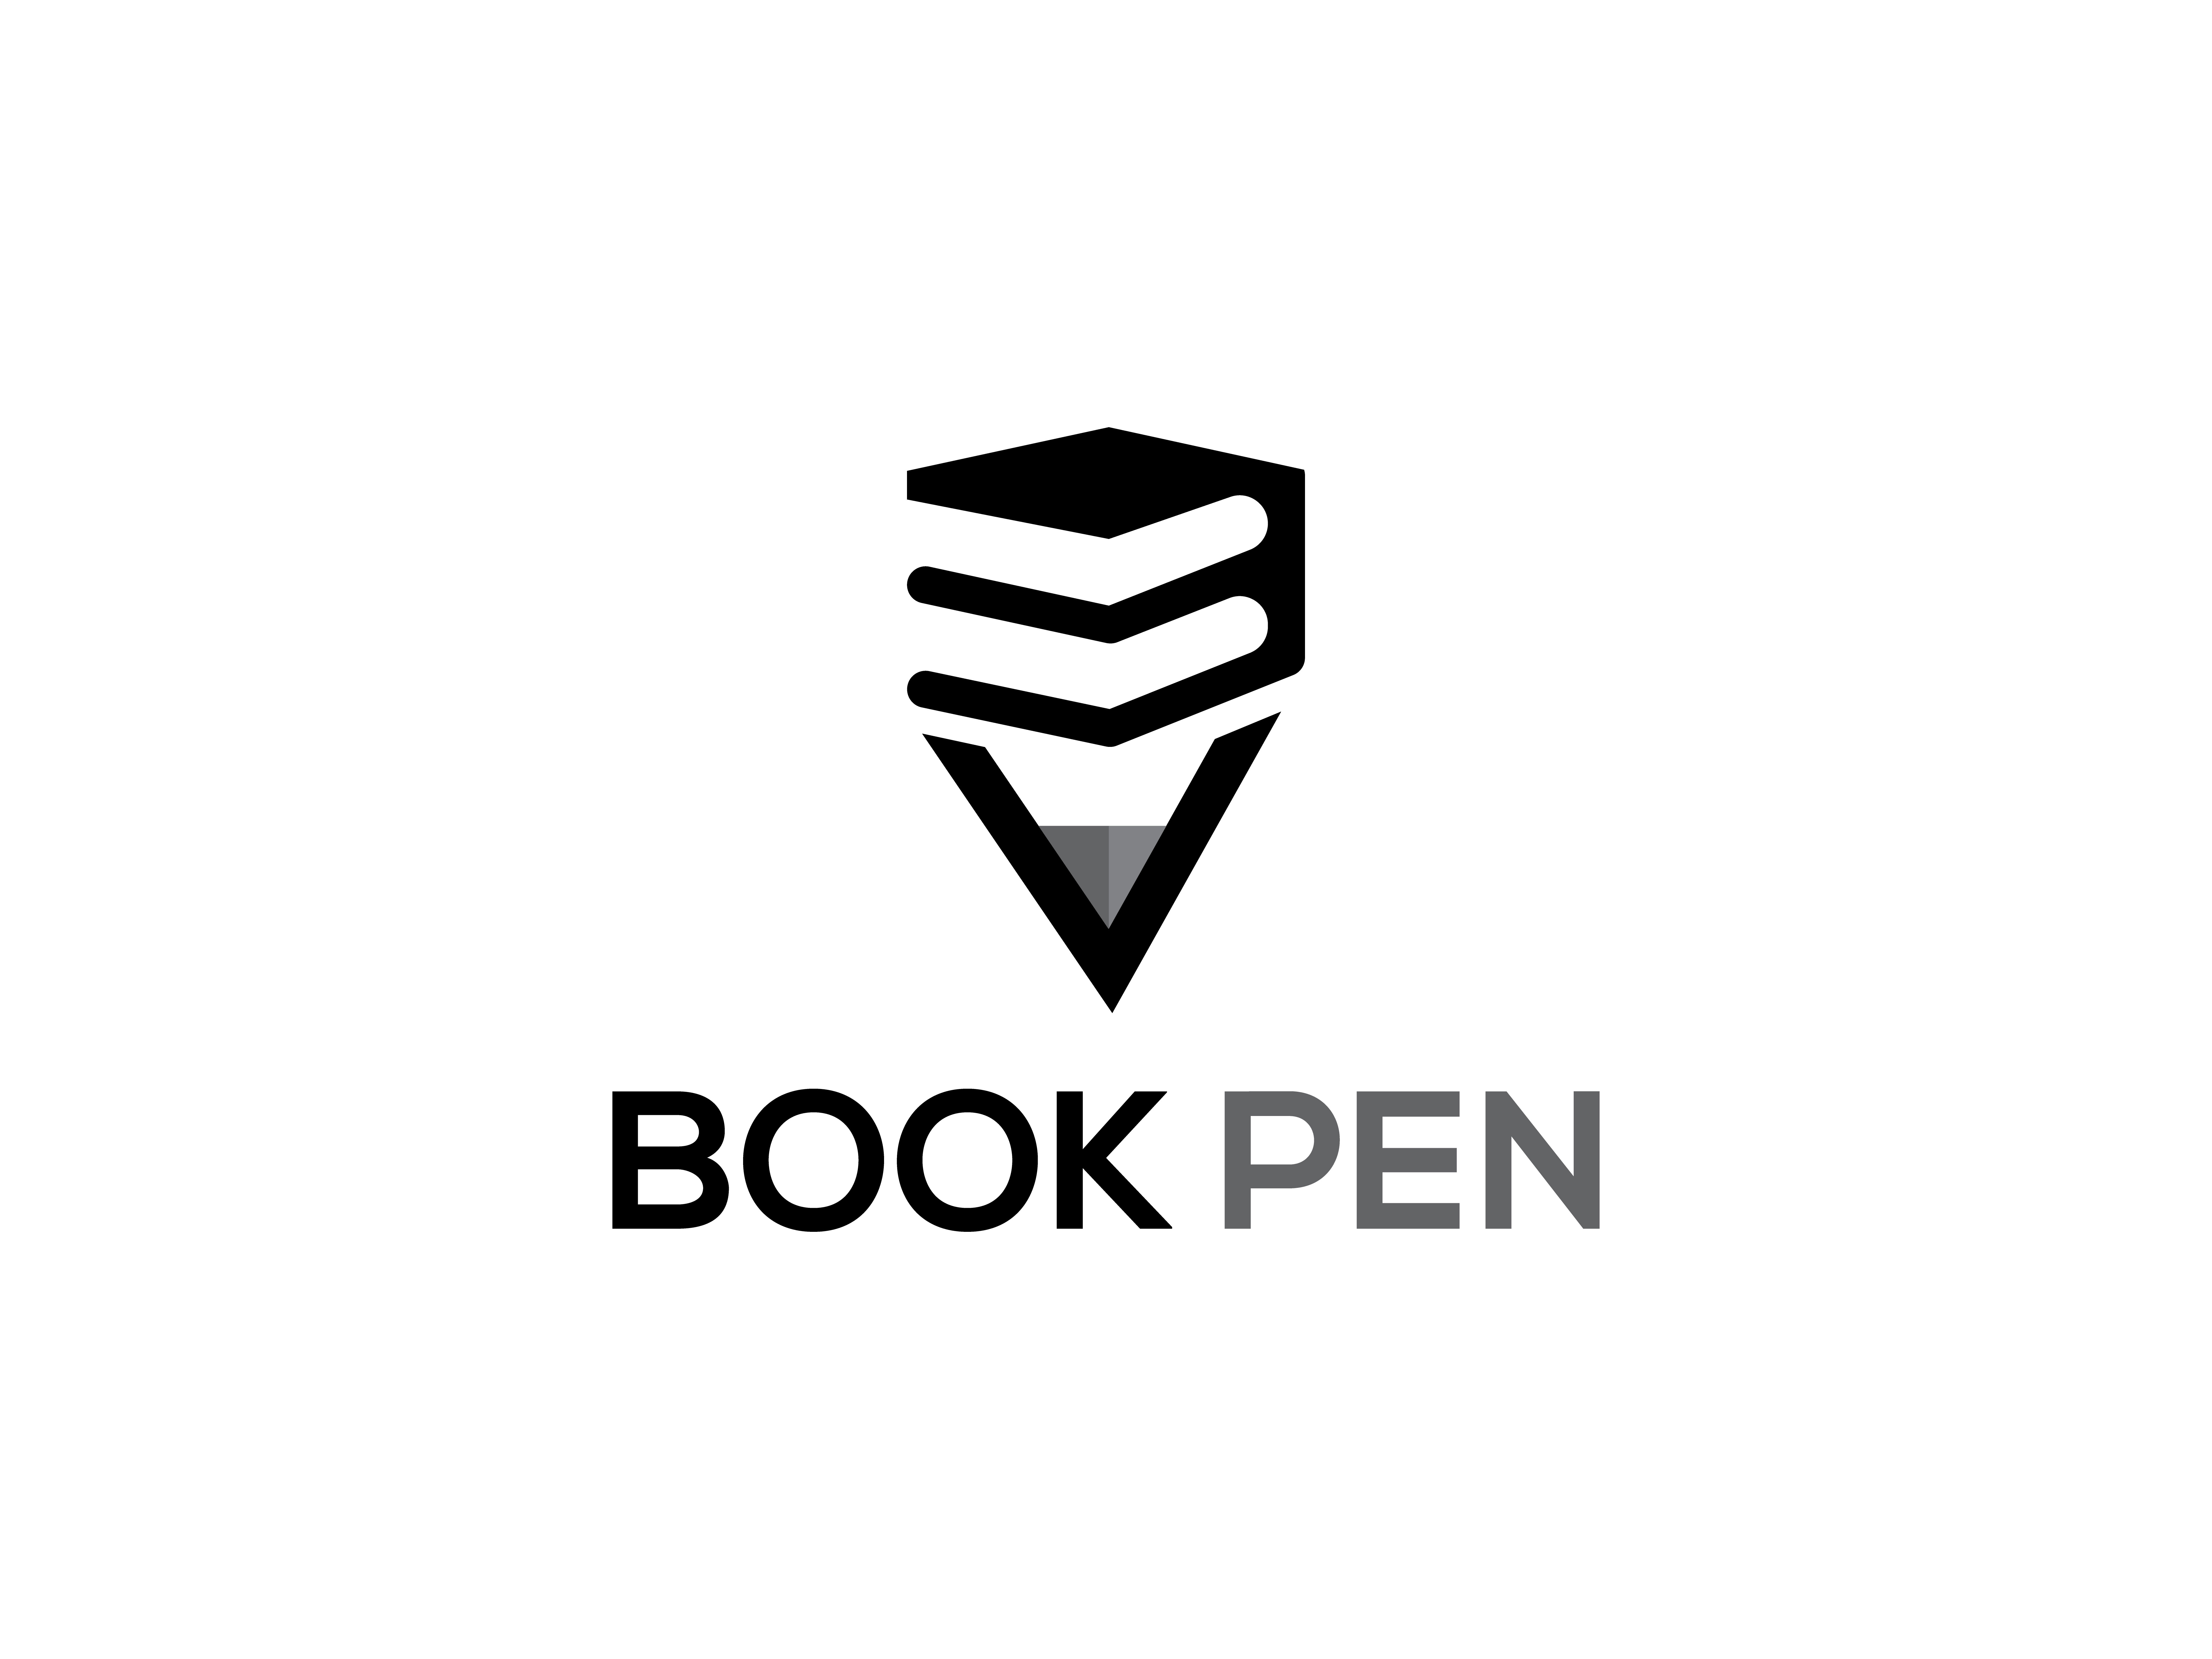 Premium Vector | Education logo with graduation hat, pen, and book in  silhouette logo design vector